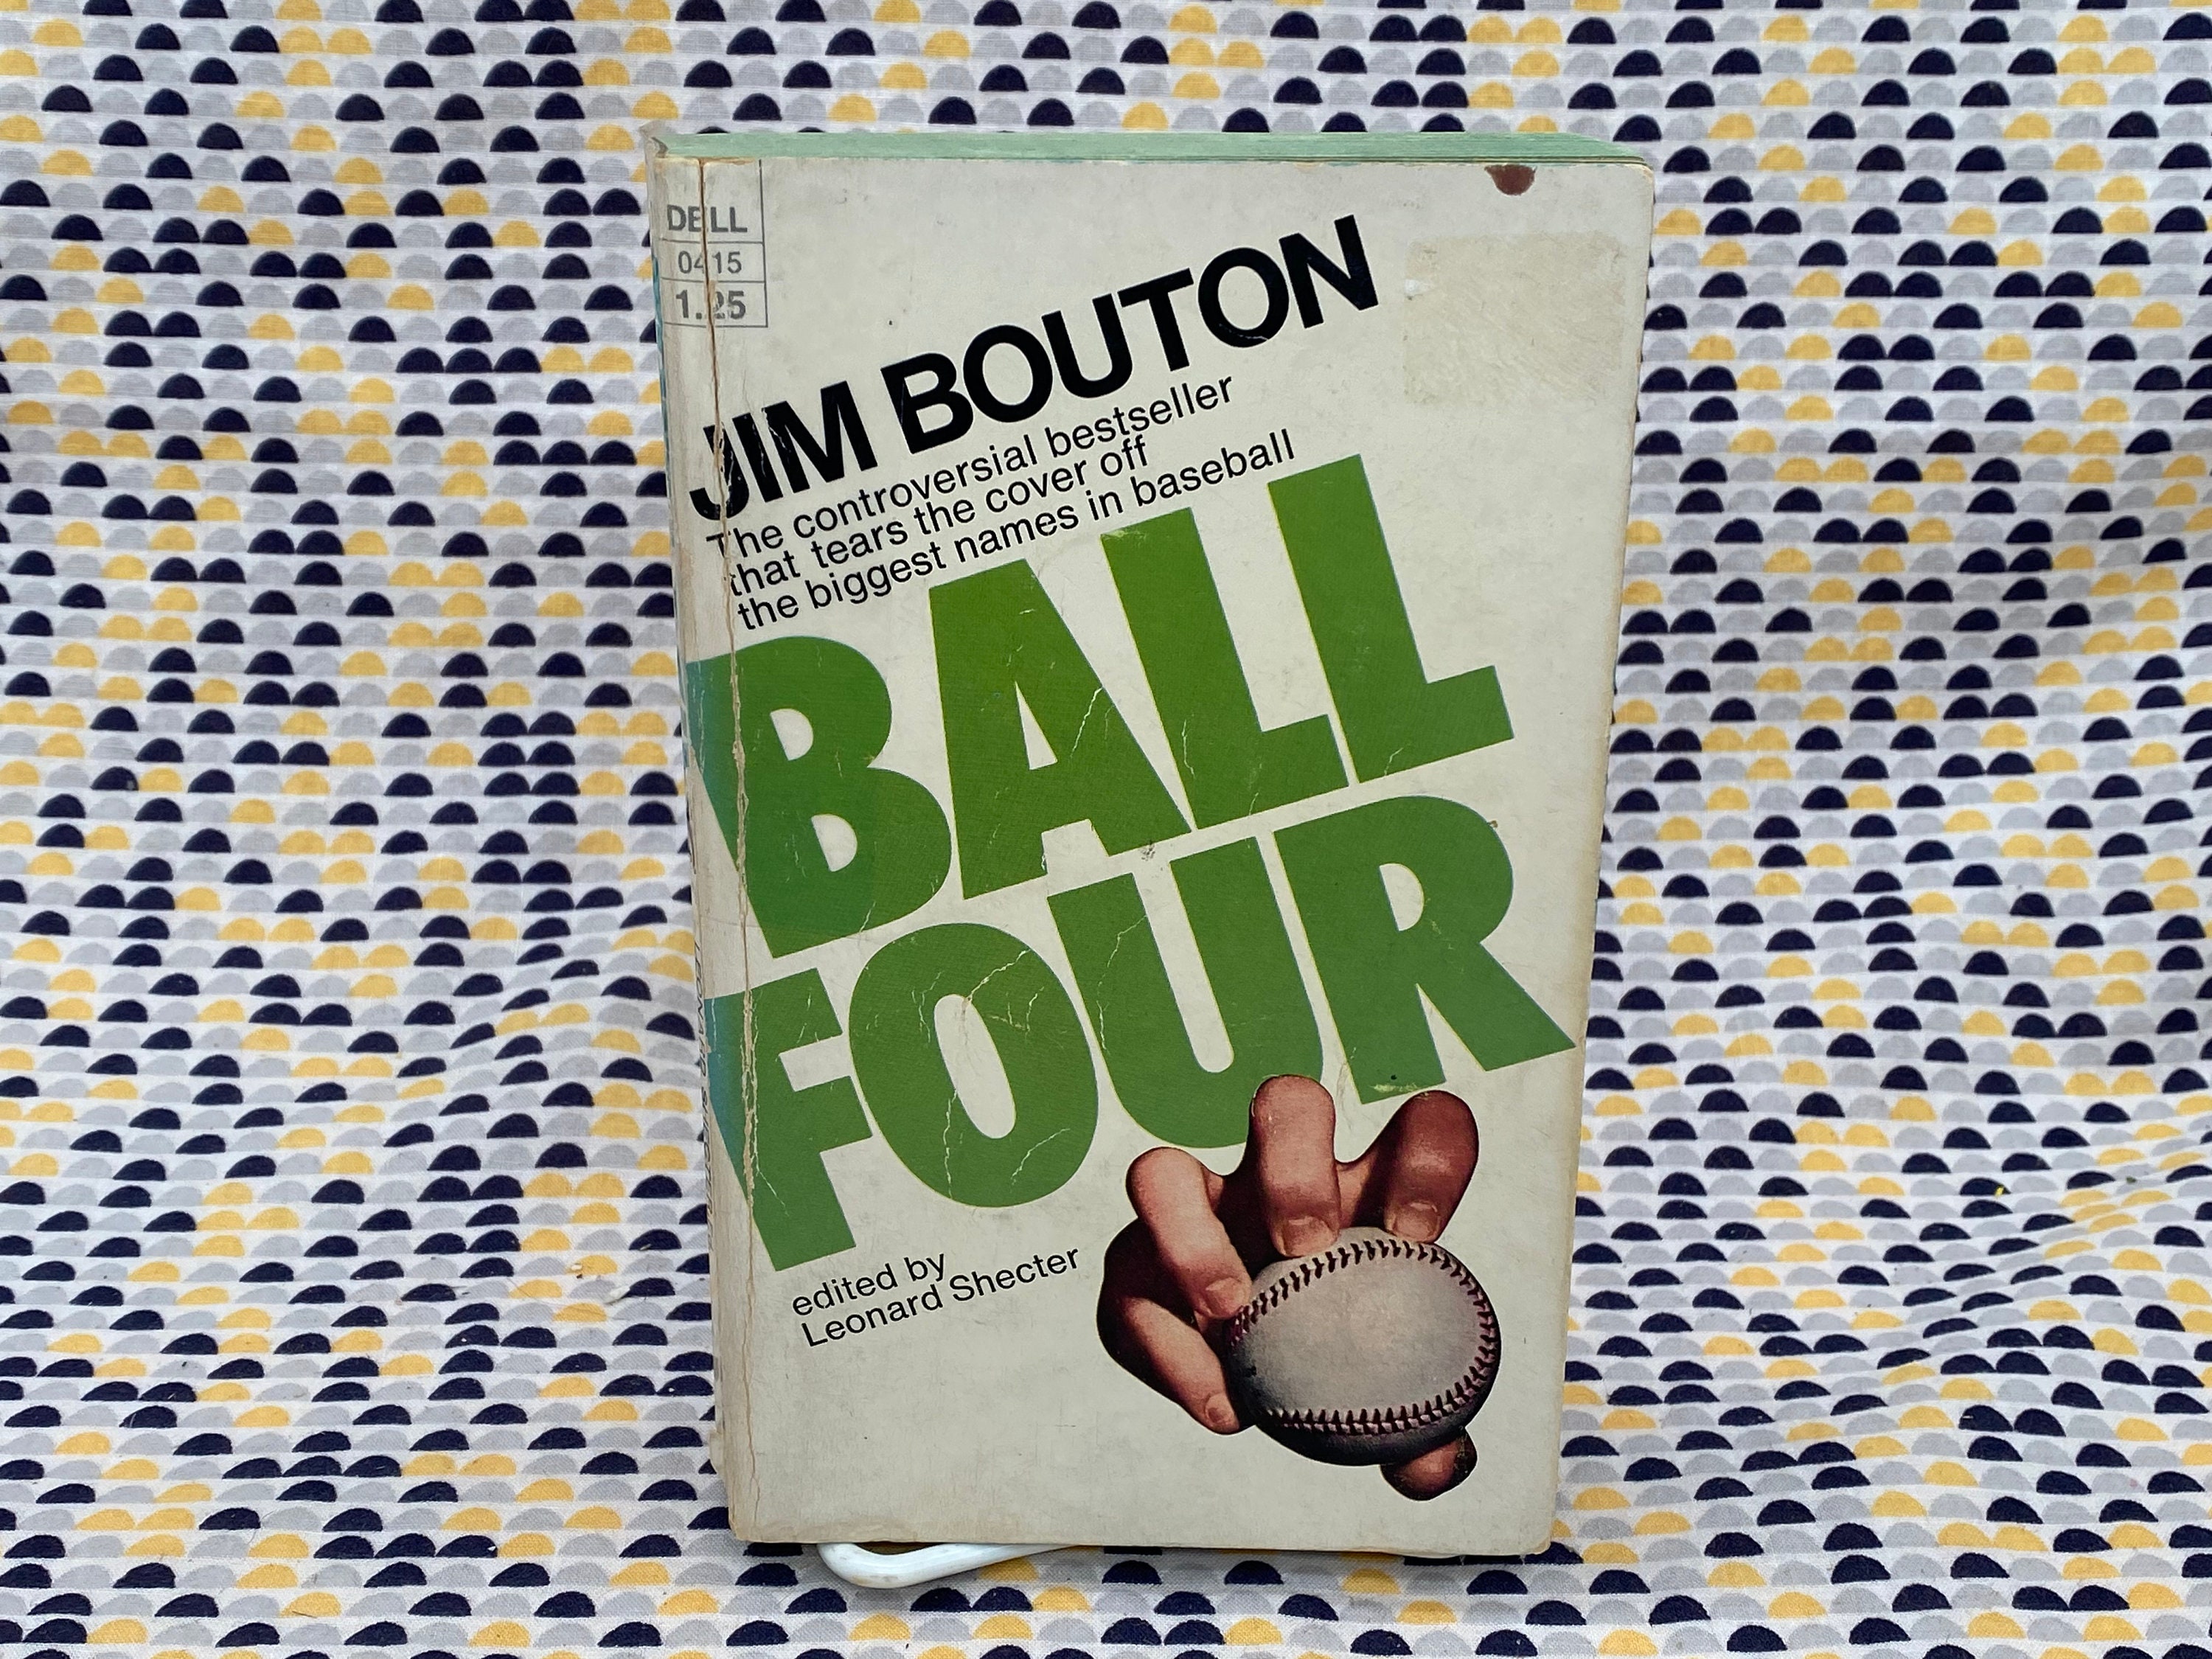 jim bouton ball four